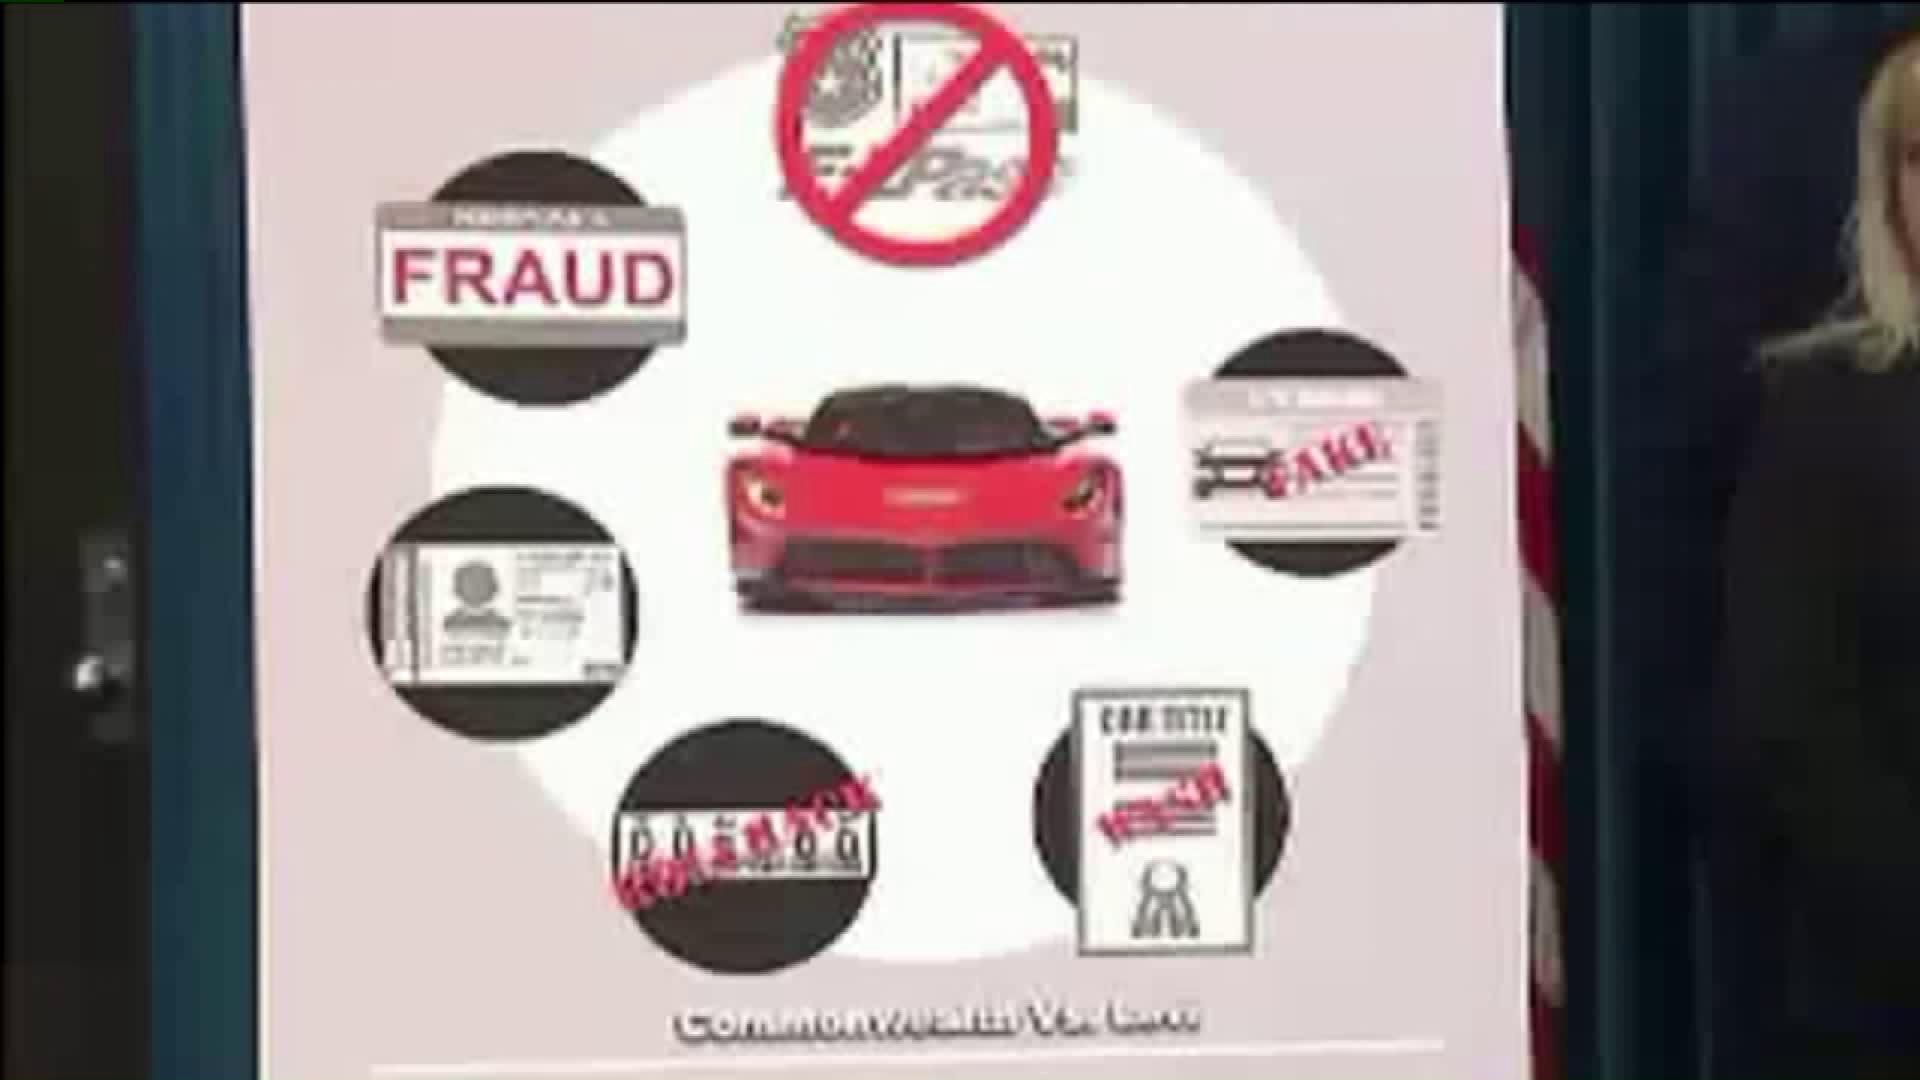 Investigation into Fraudulent Pennsylvania License Plates